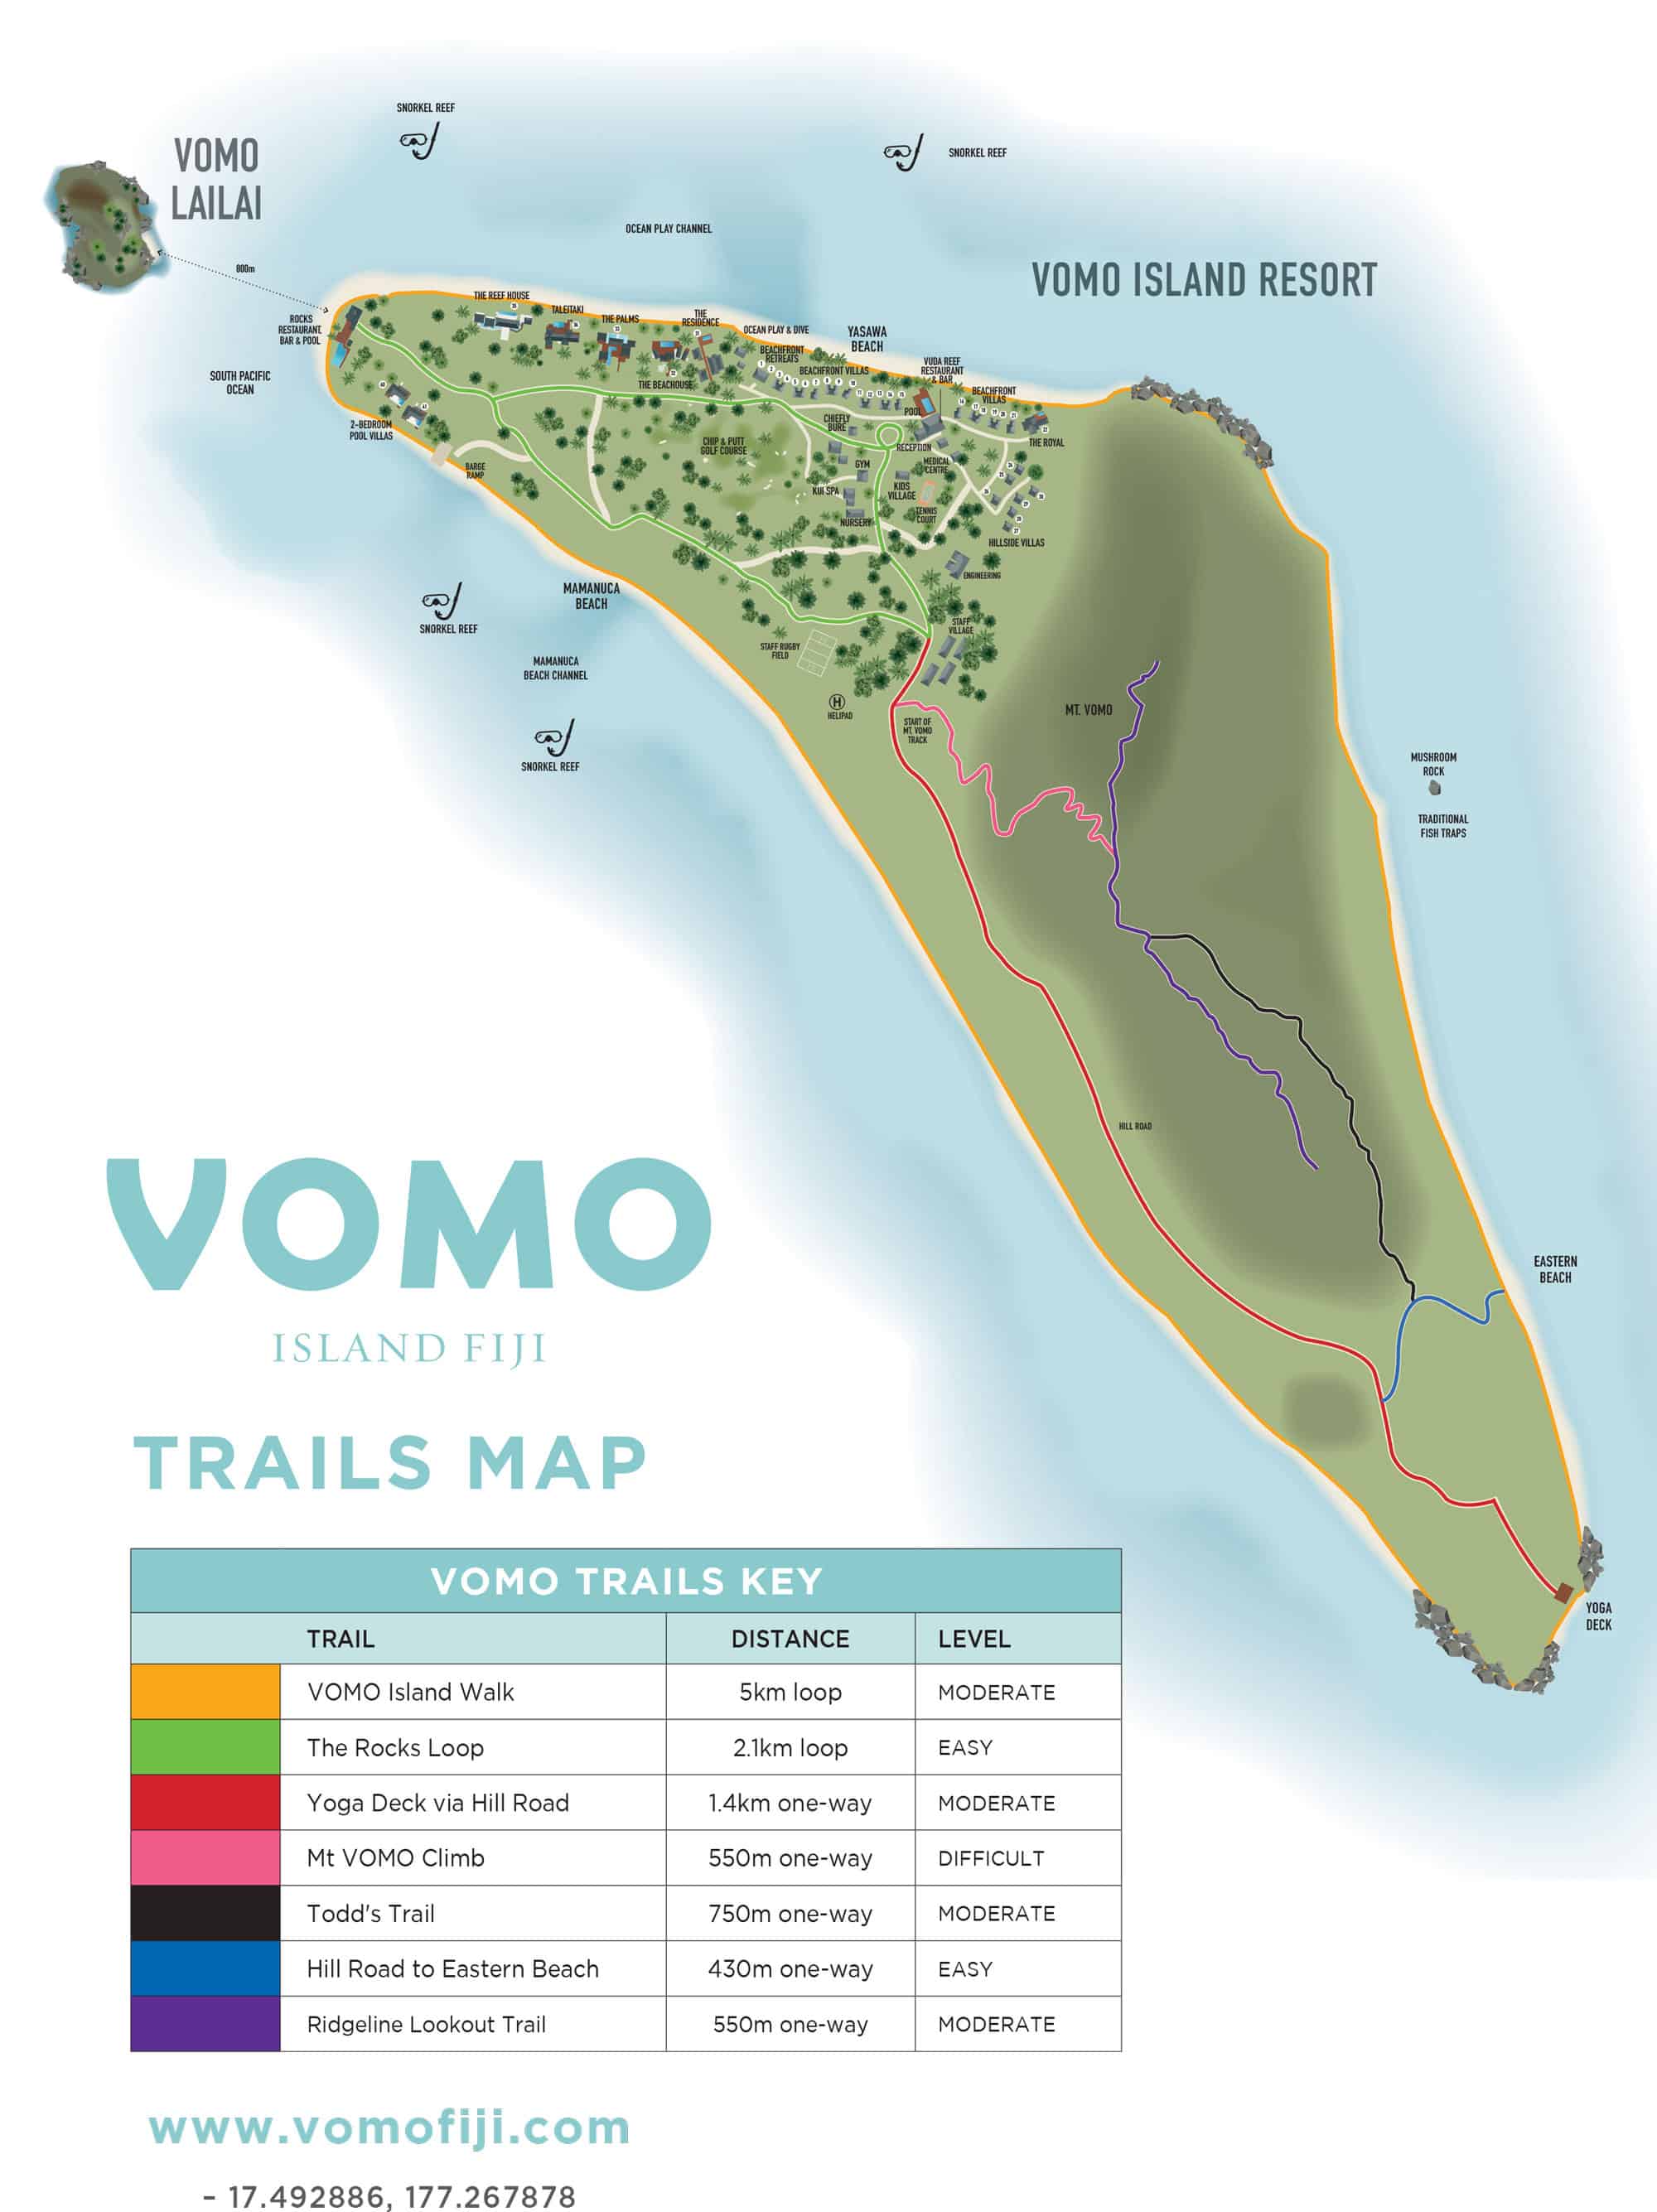 Vomo trails map a